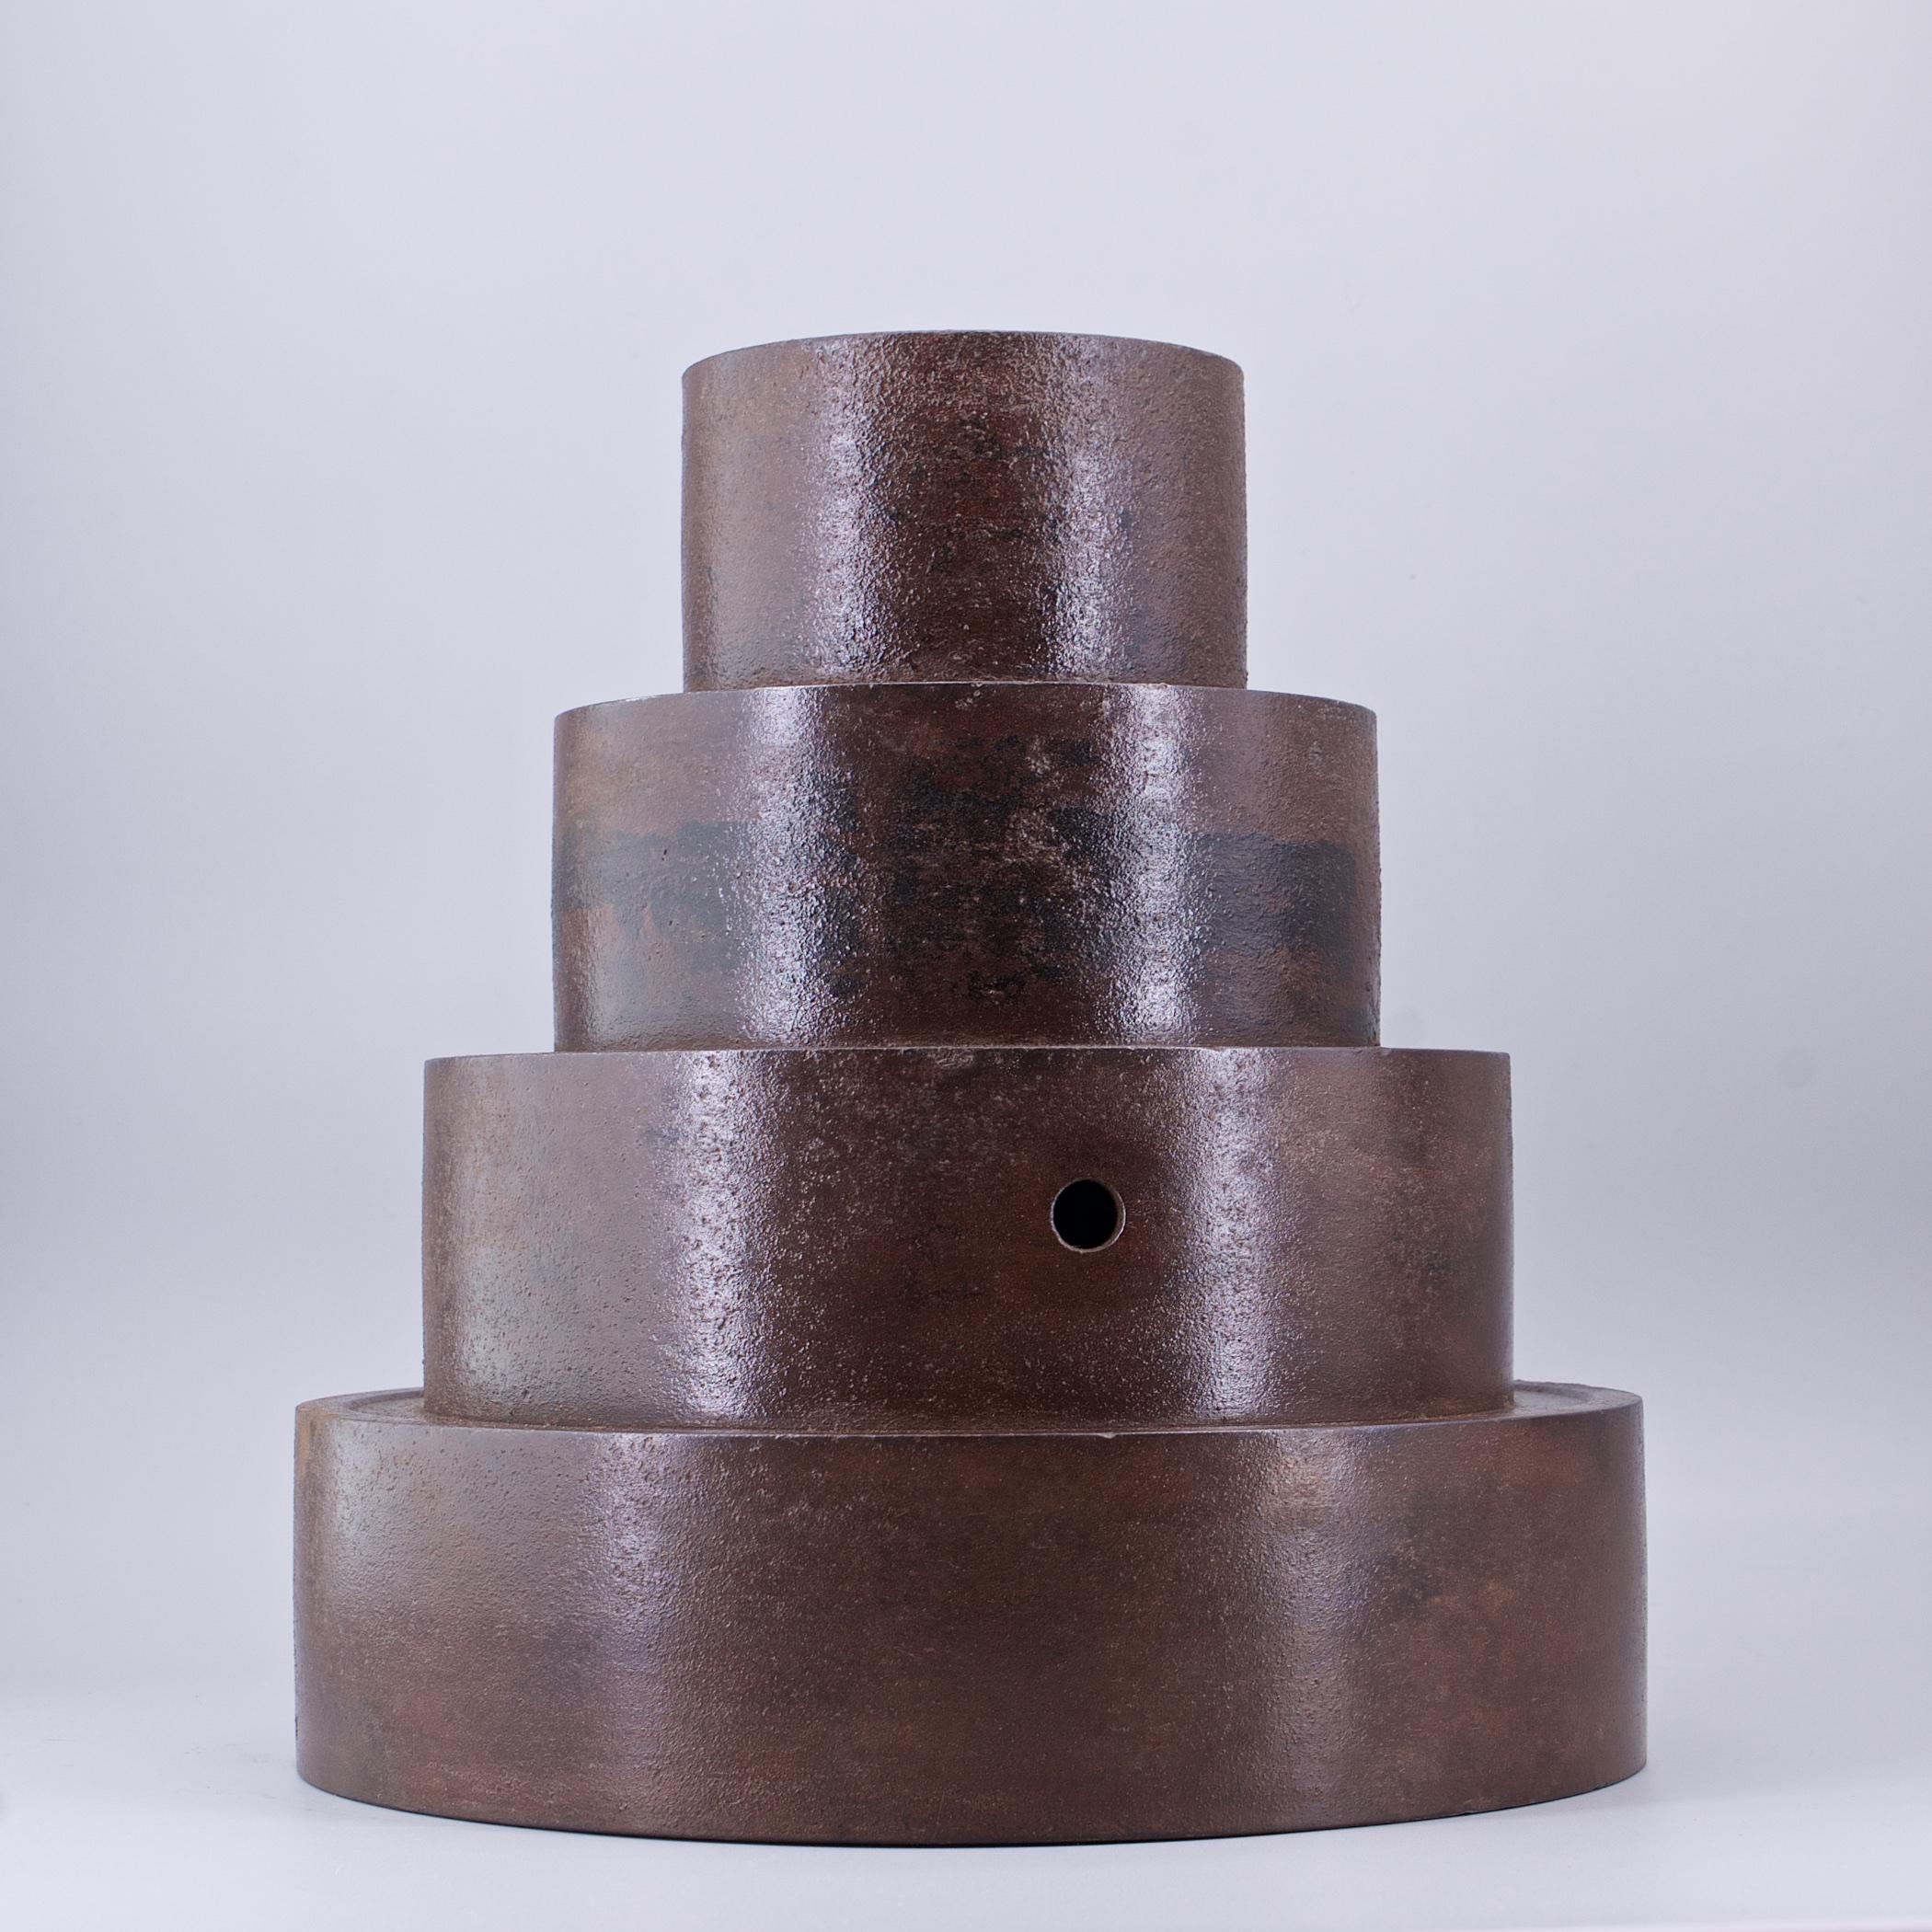 Cast Late 1800s Iron Concentric Form Geometric Table Sculpture Modernist Symmetry For Sale